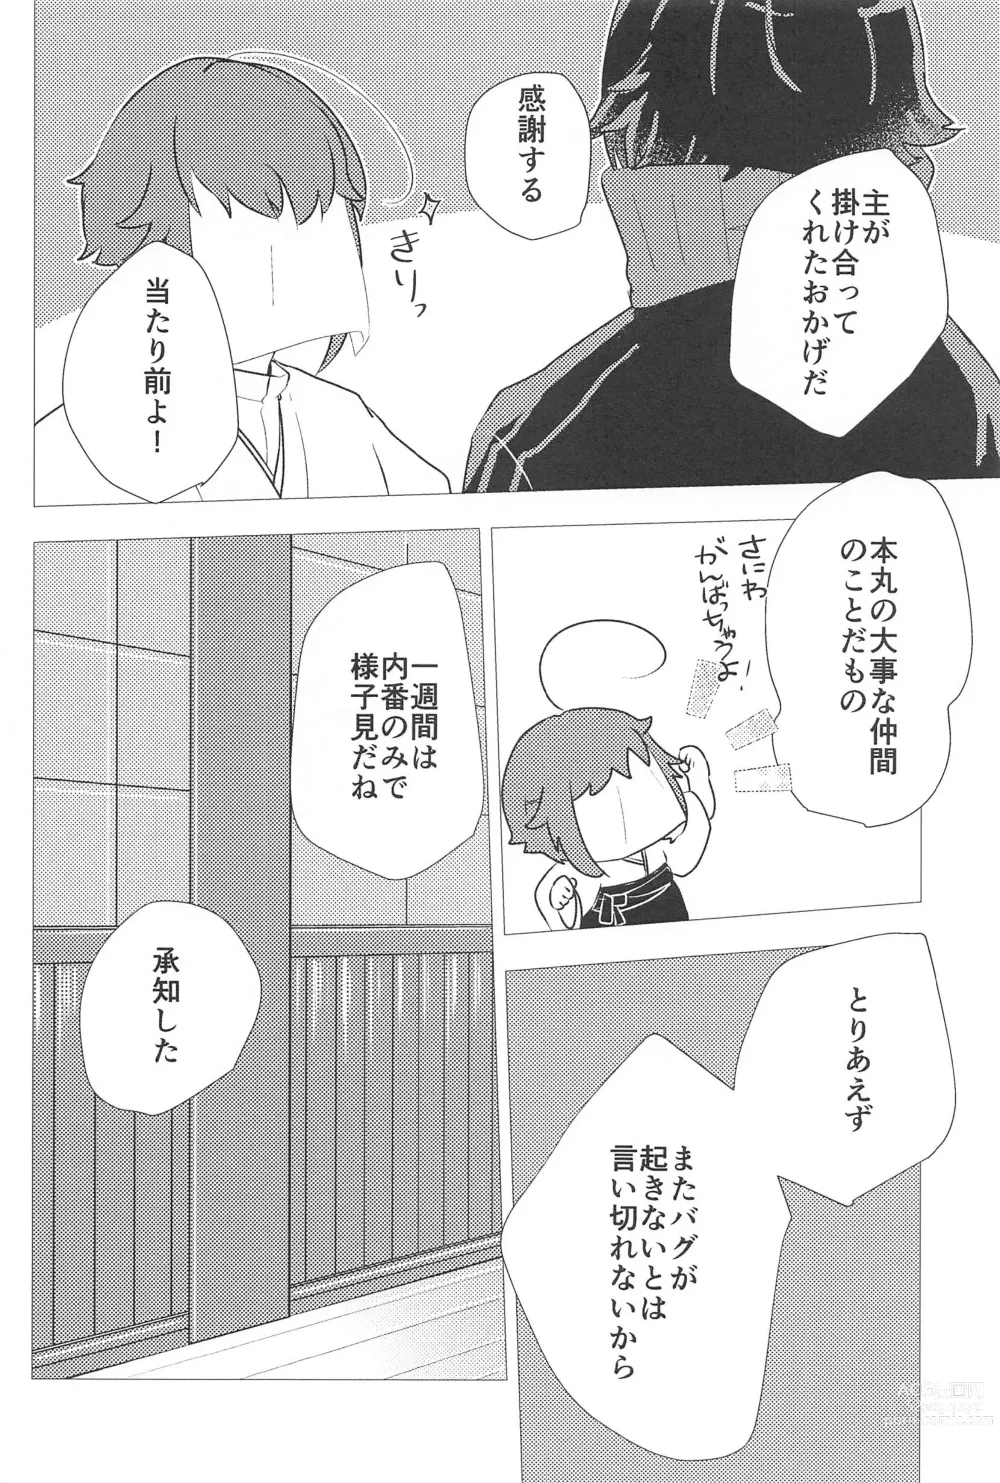 Page 33 of doujinshi Konnanotte Nai!